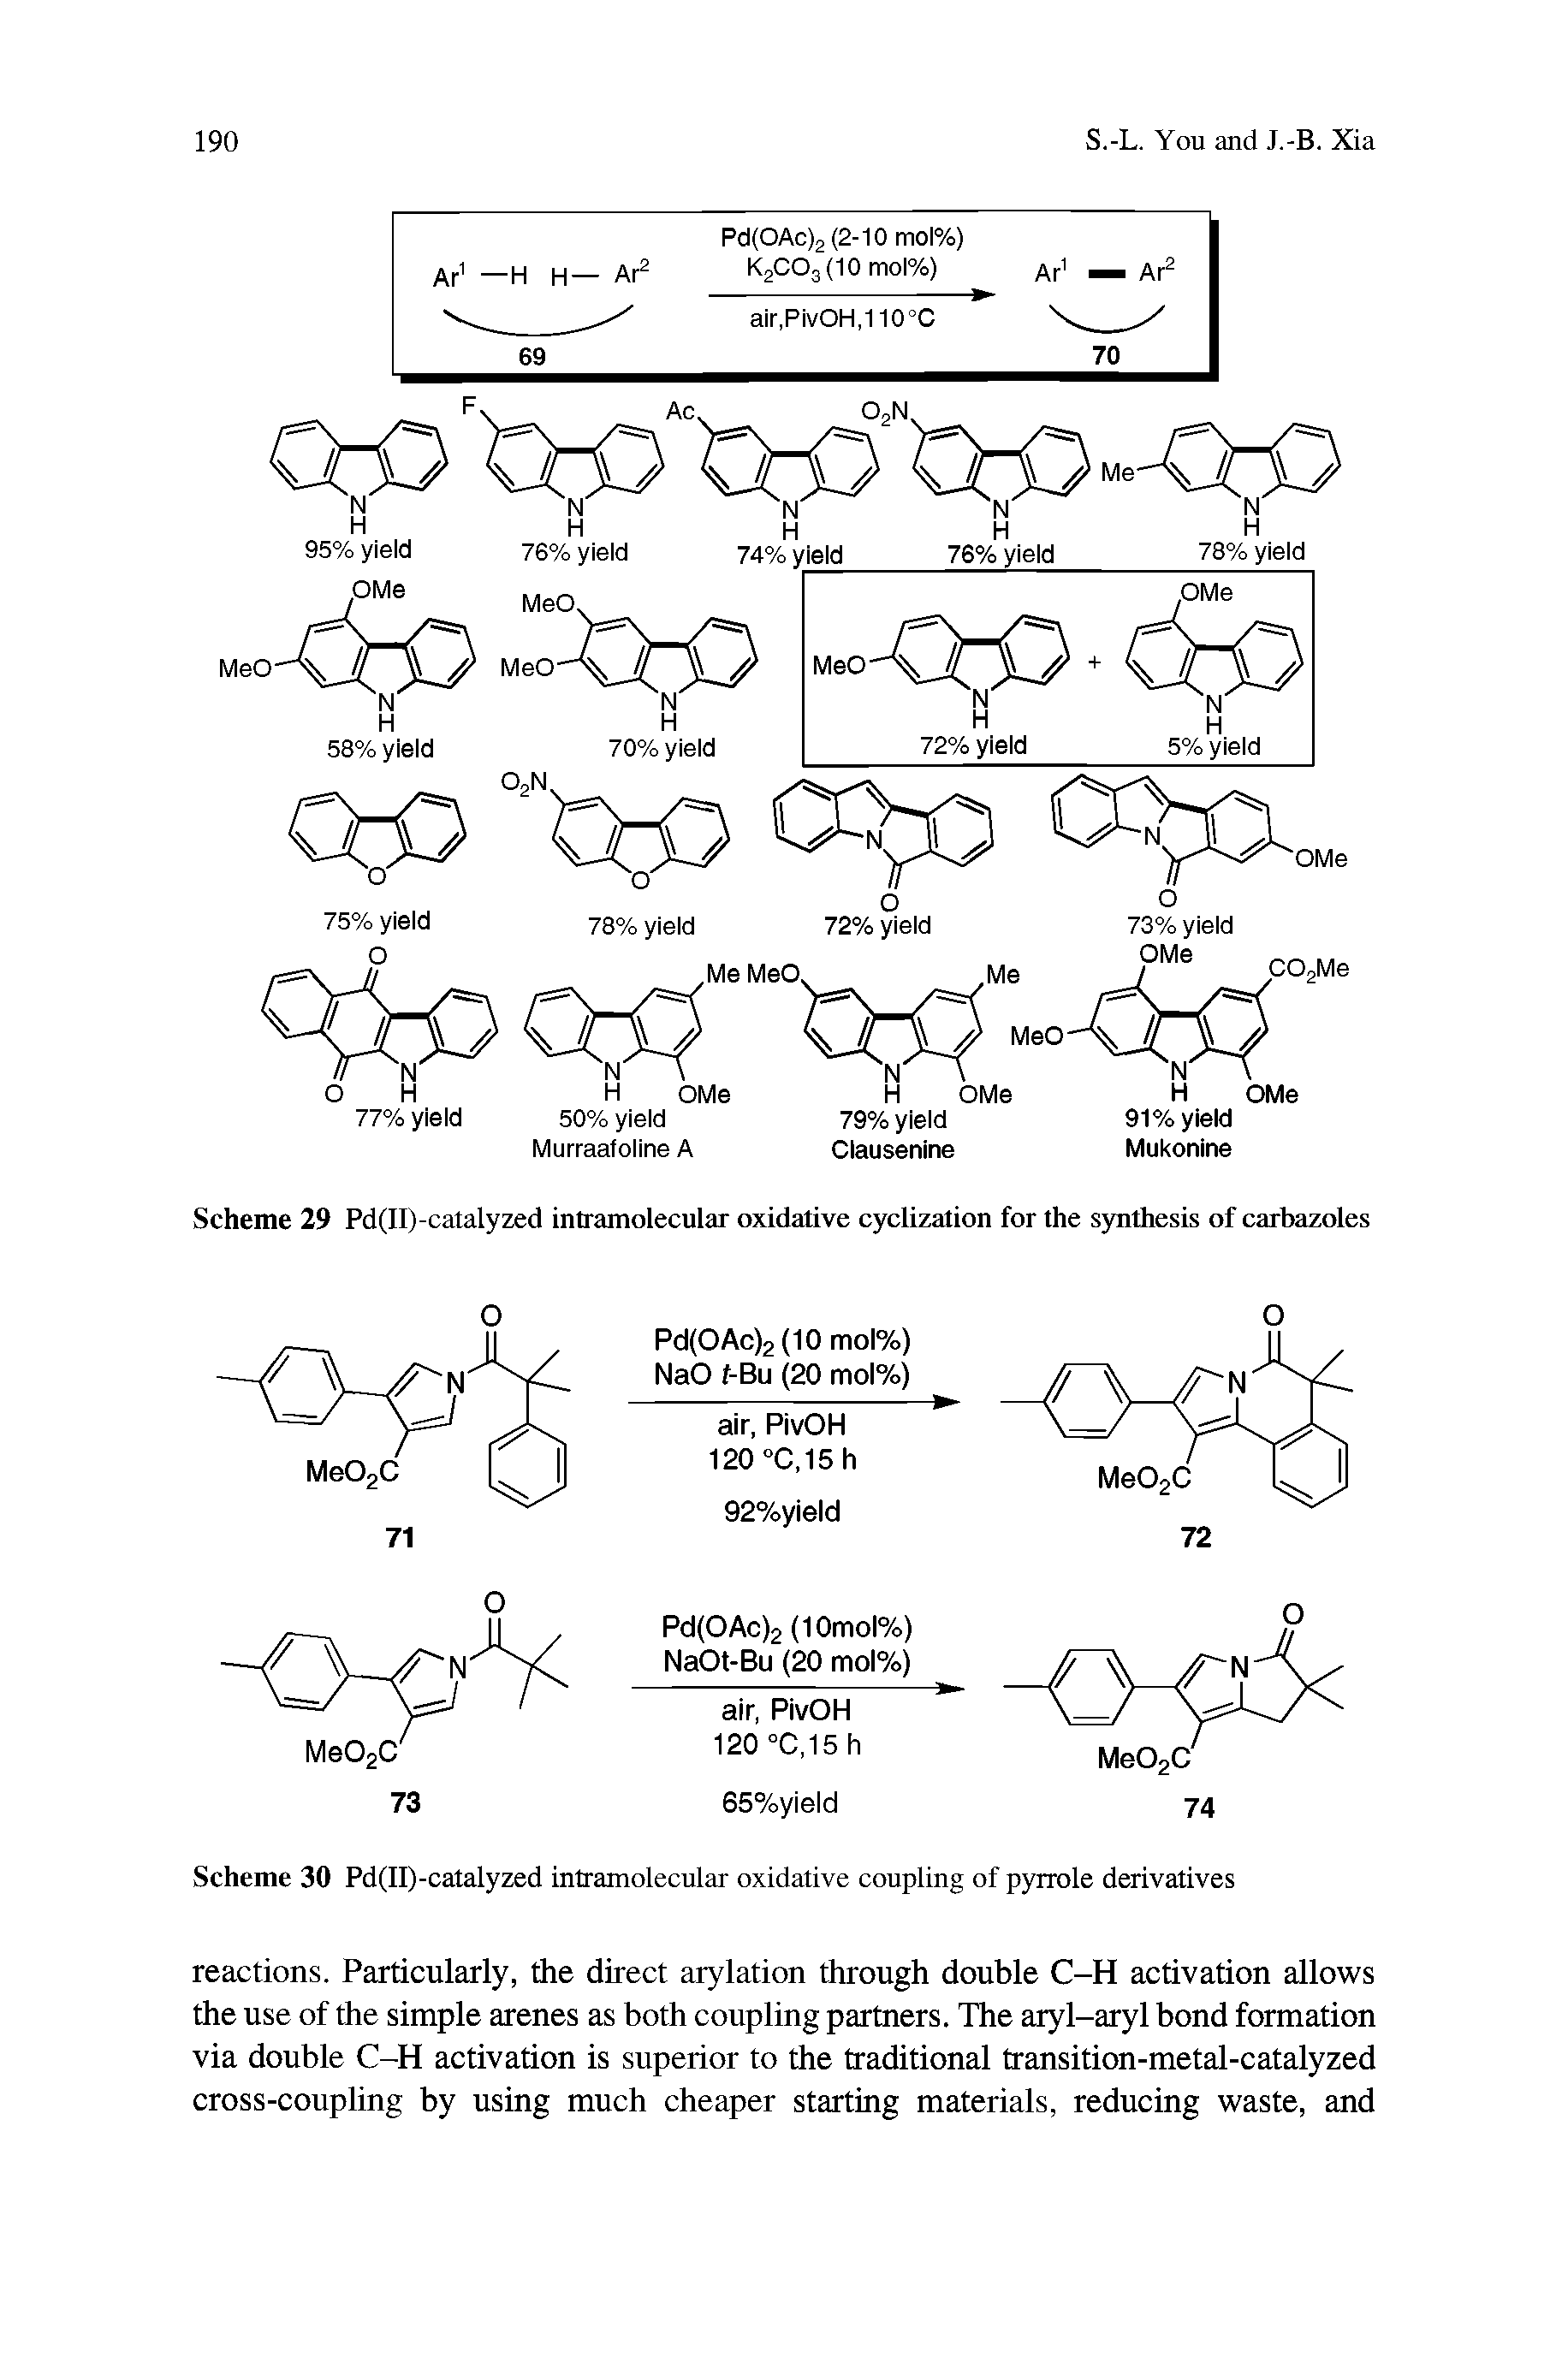 Scheme 30 Pd(II)-catalyzed intramolecular oxidative coupling of pyrrole derivatives...